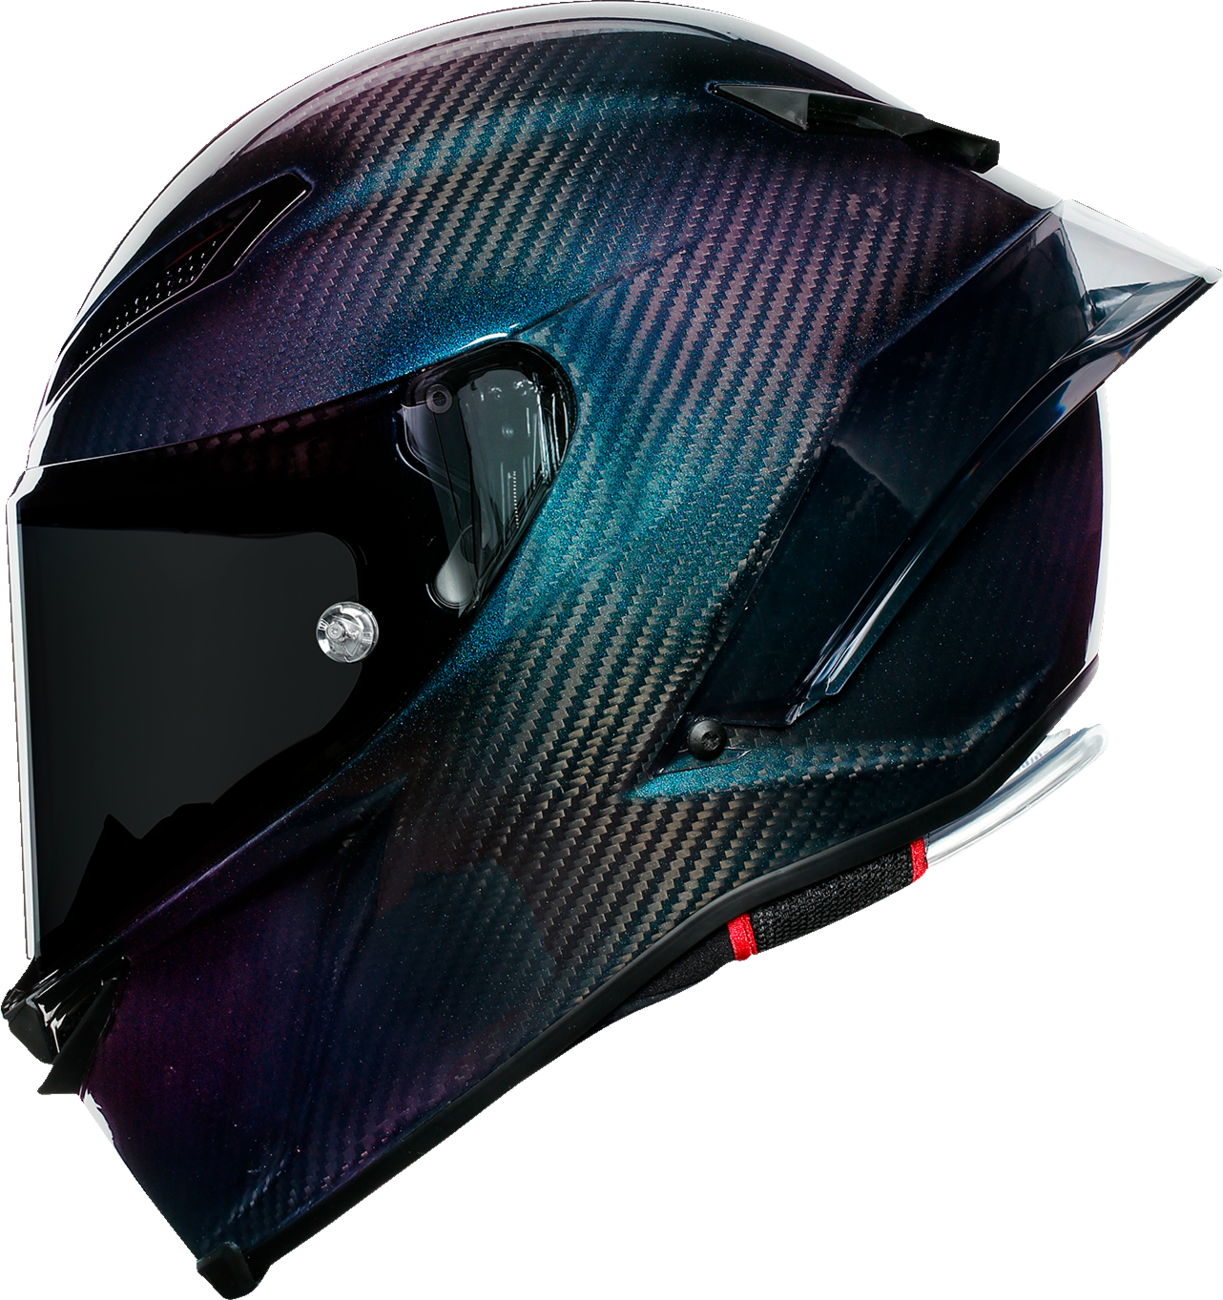 AGV Pista GP RR Helmet - Iridium Carbon - Small 2118356002012S